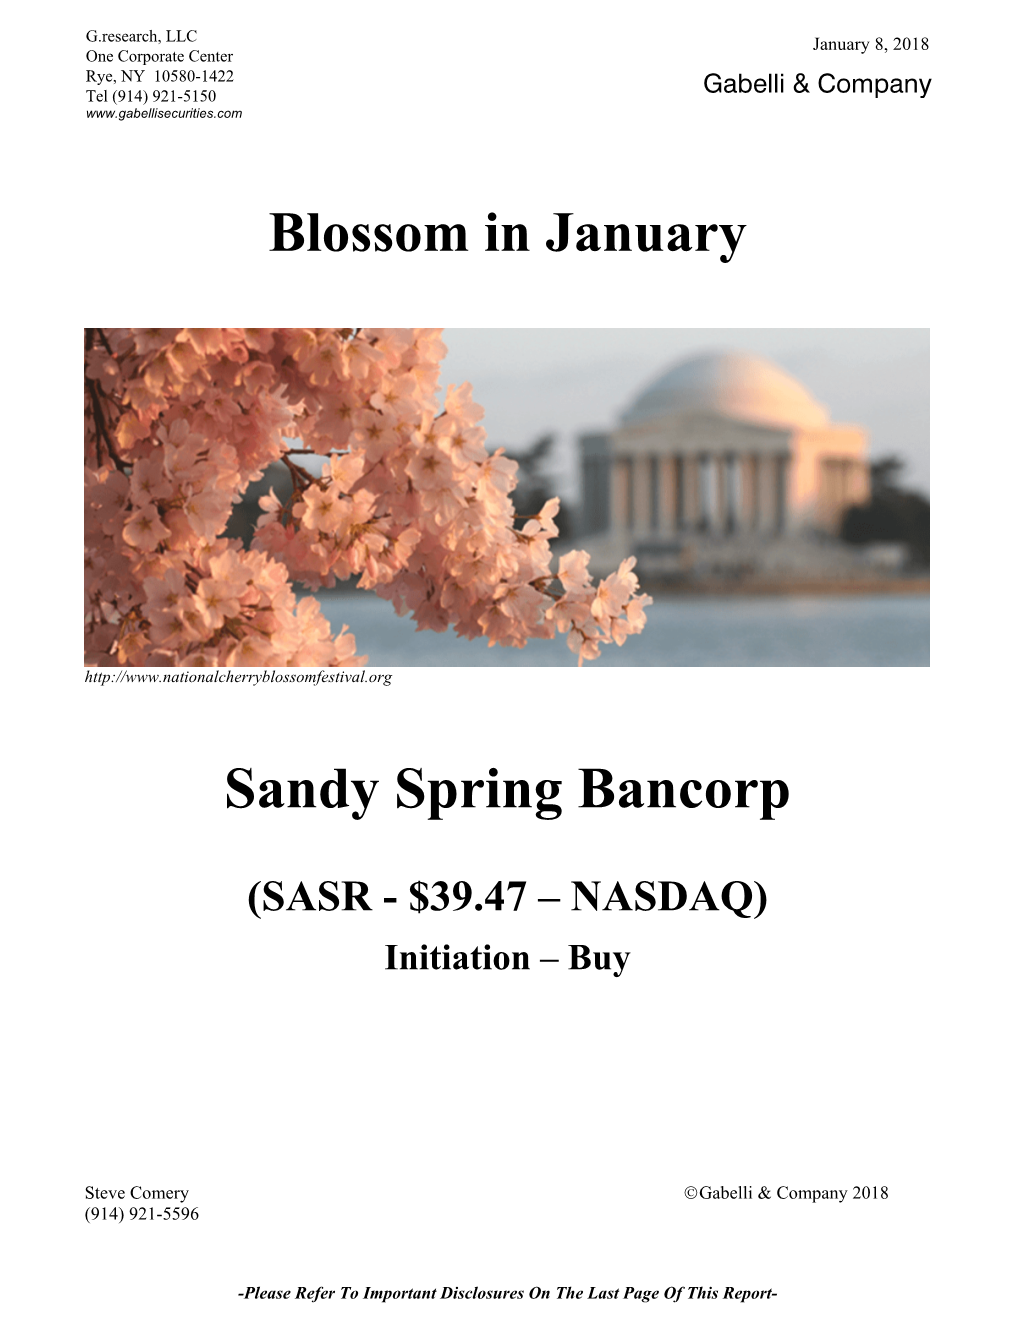 Sandy Spring Bancorp